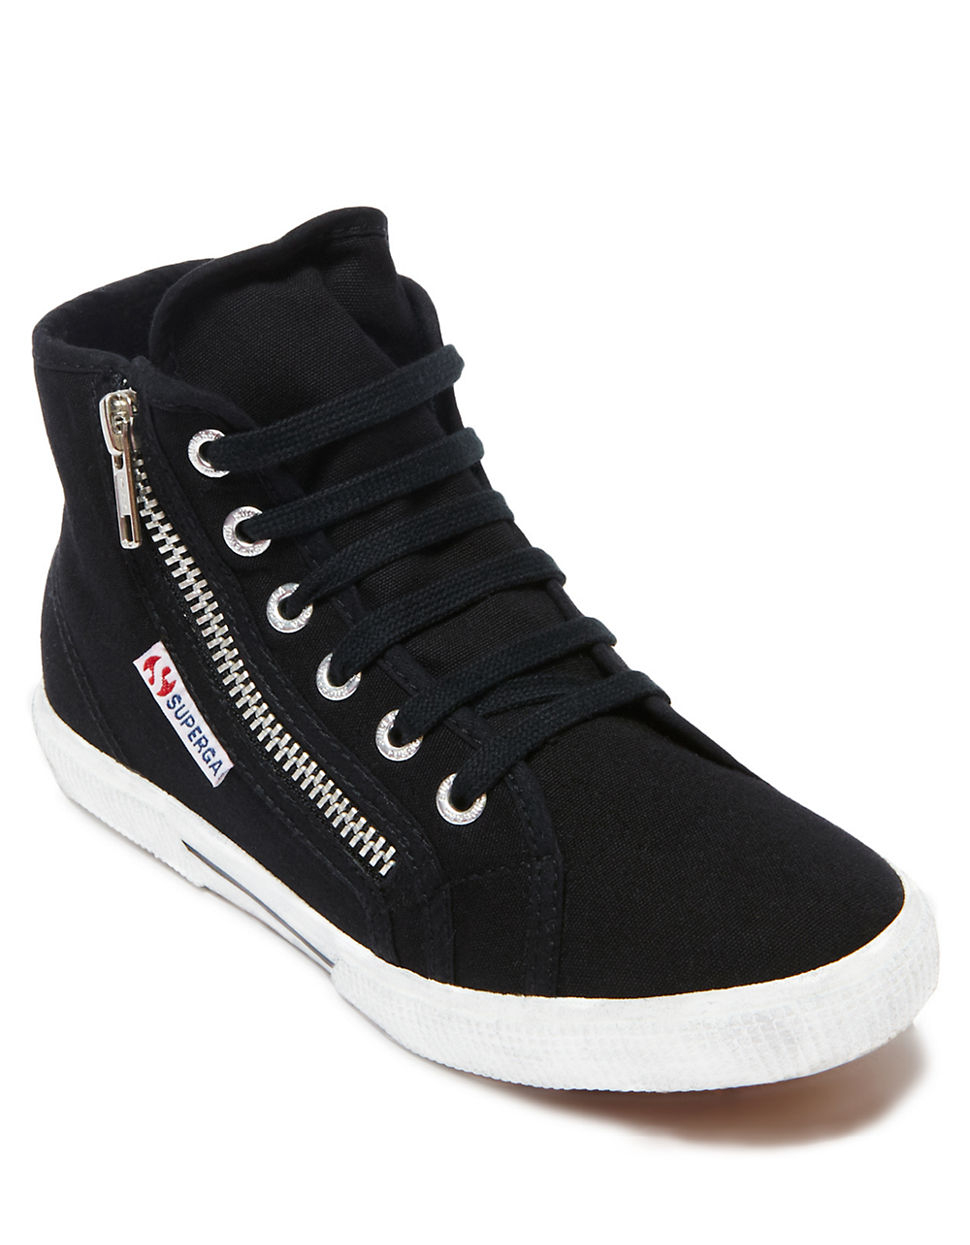 Superga Cotu Cotton Hi-Top Sneakers in Black | Lyst